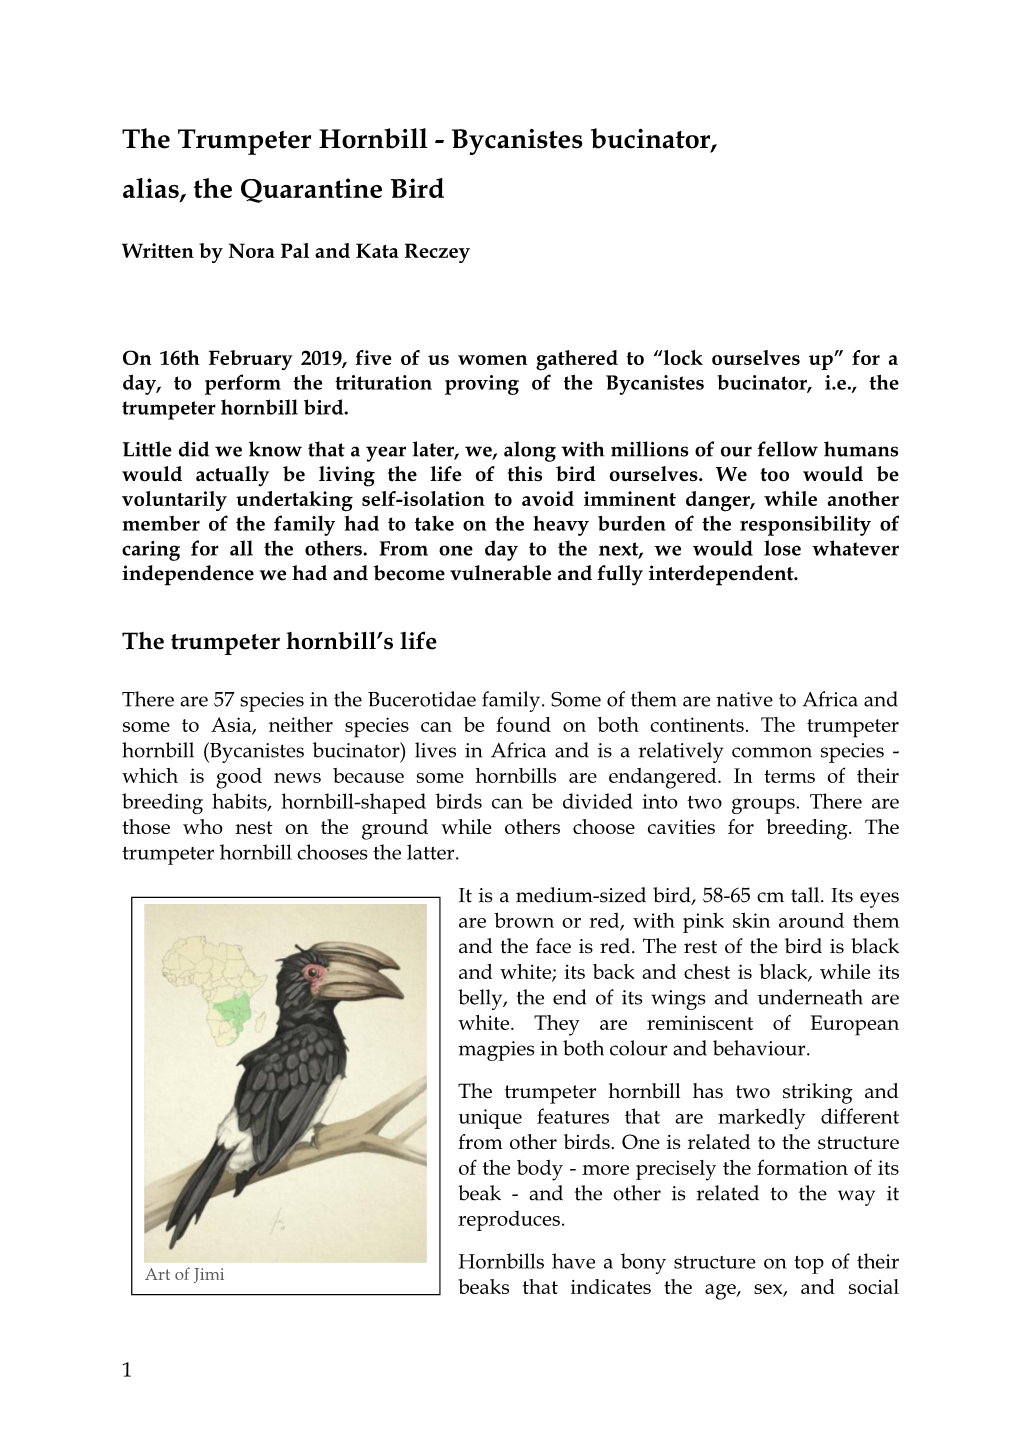 The Trumpeter Hornbill - Bycanistes Bucinator, Alias, the Quarantine Bird